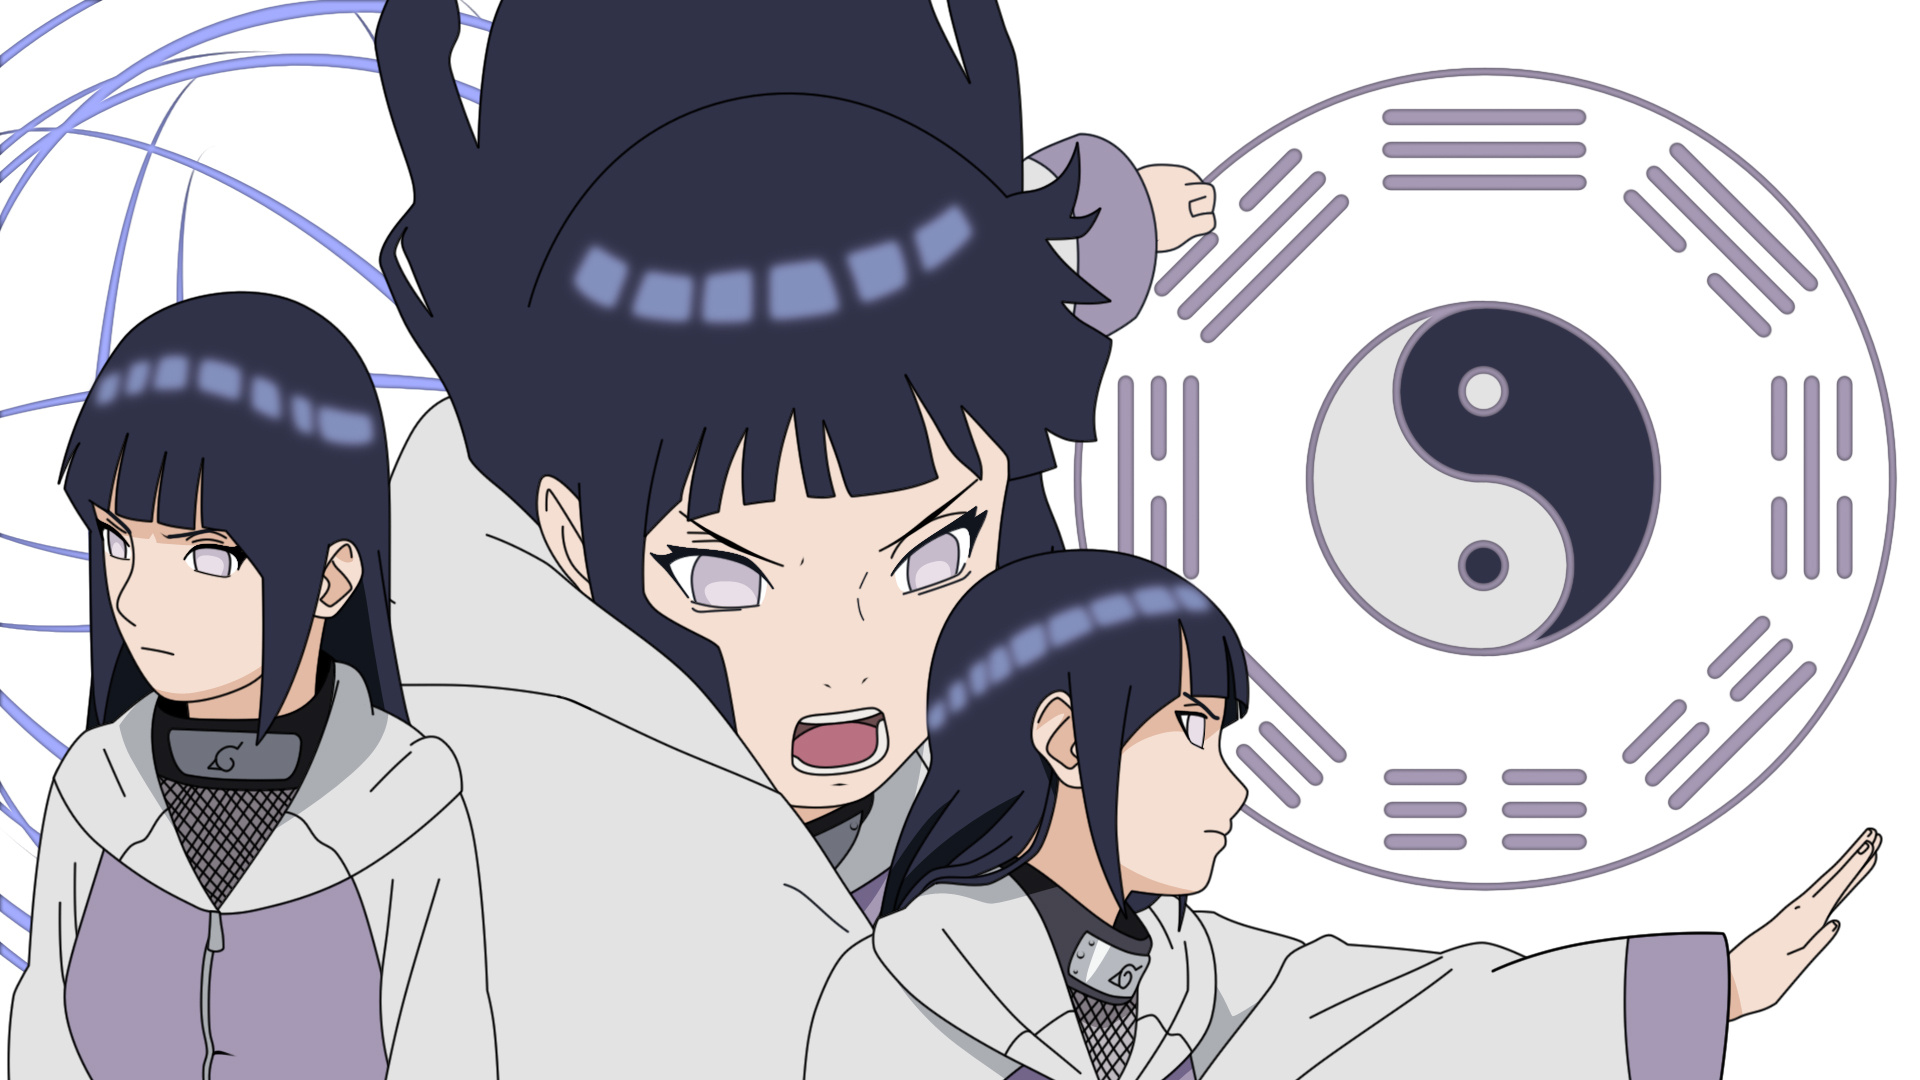 Hinata wallpaper, Hyuuga clan theme, Naruto anime character, Serene anime scene, 1920x1080 Full HD Desktop